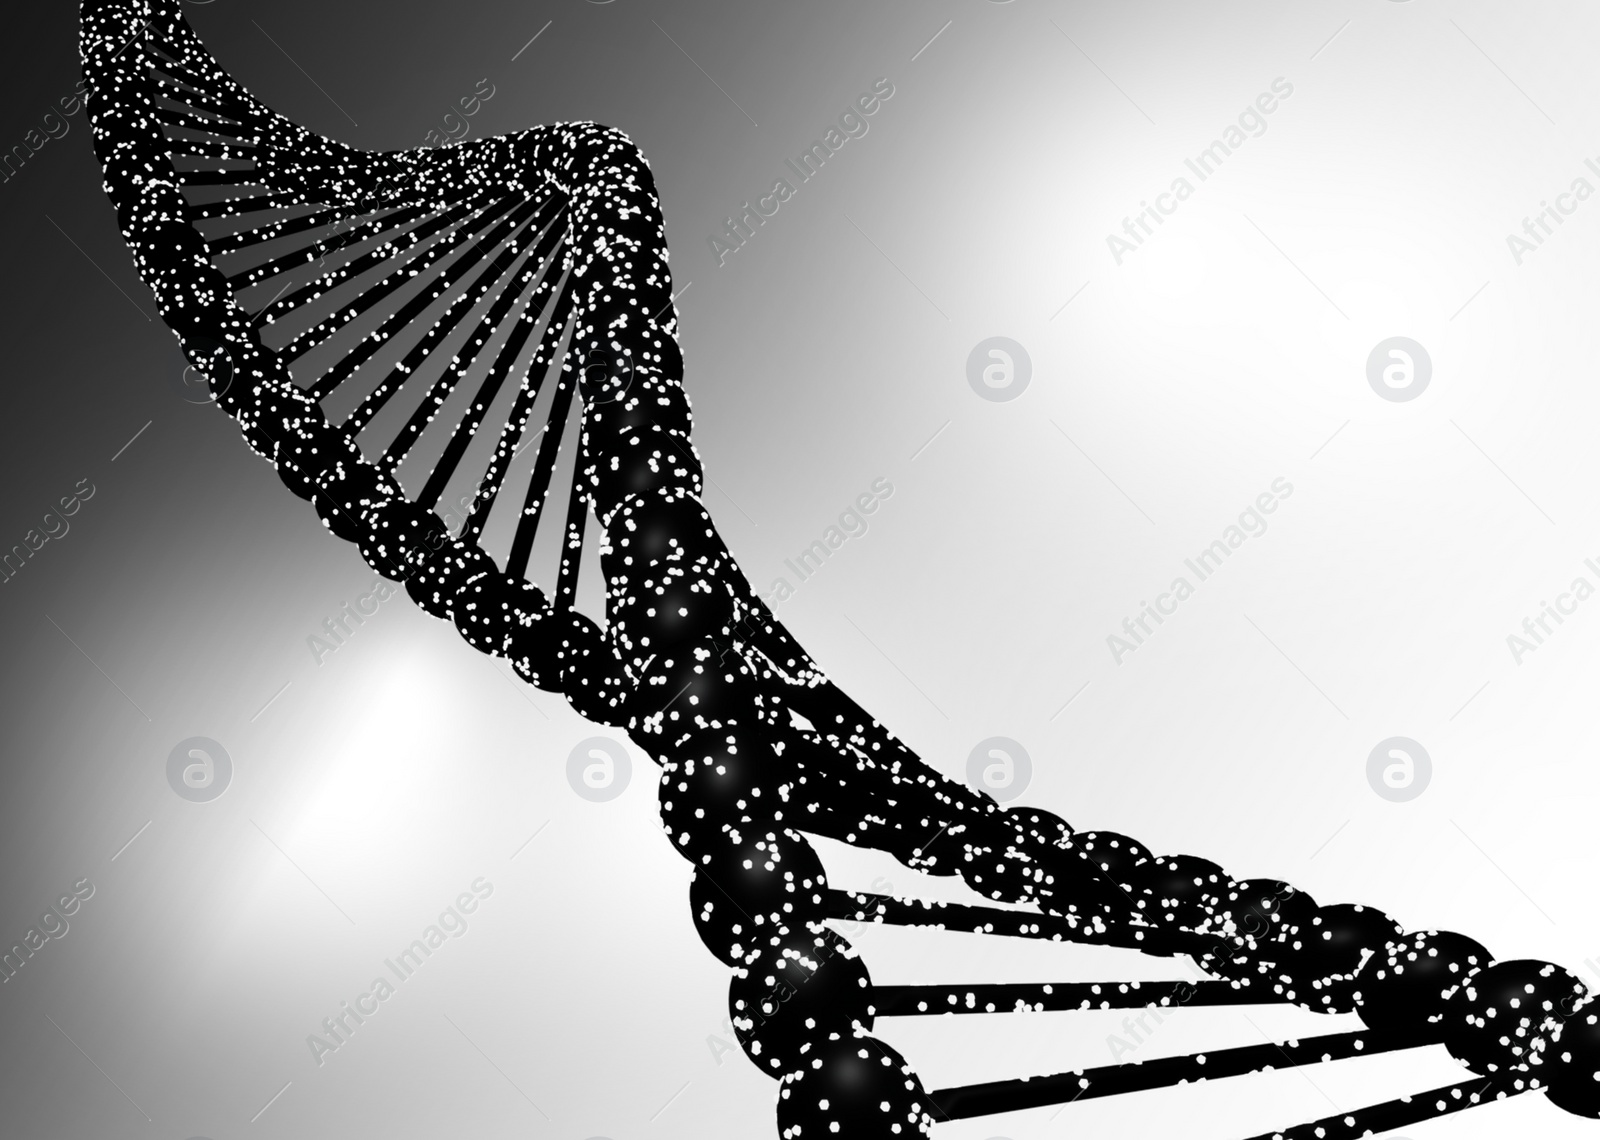 Illustration of Structure of DNA on light grey background. Illustration